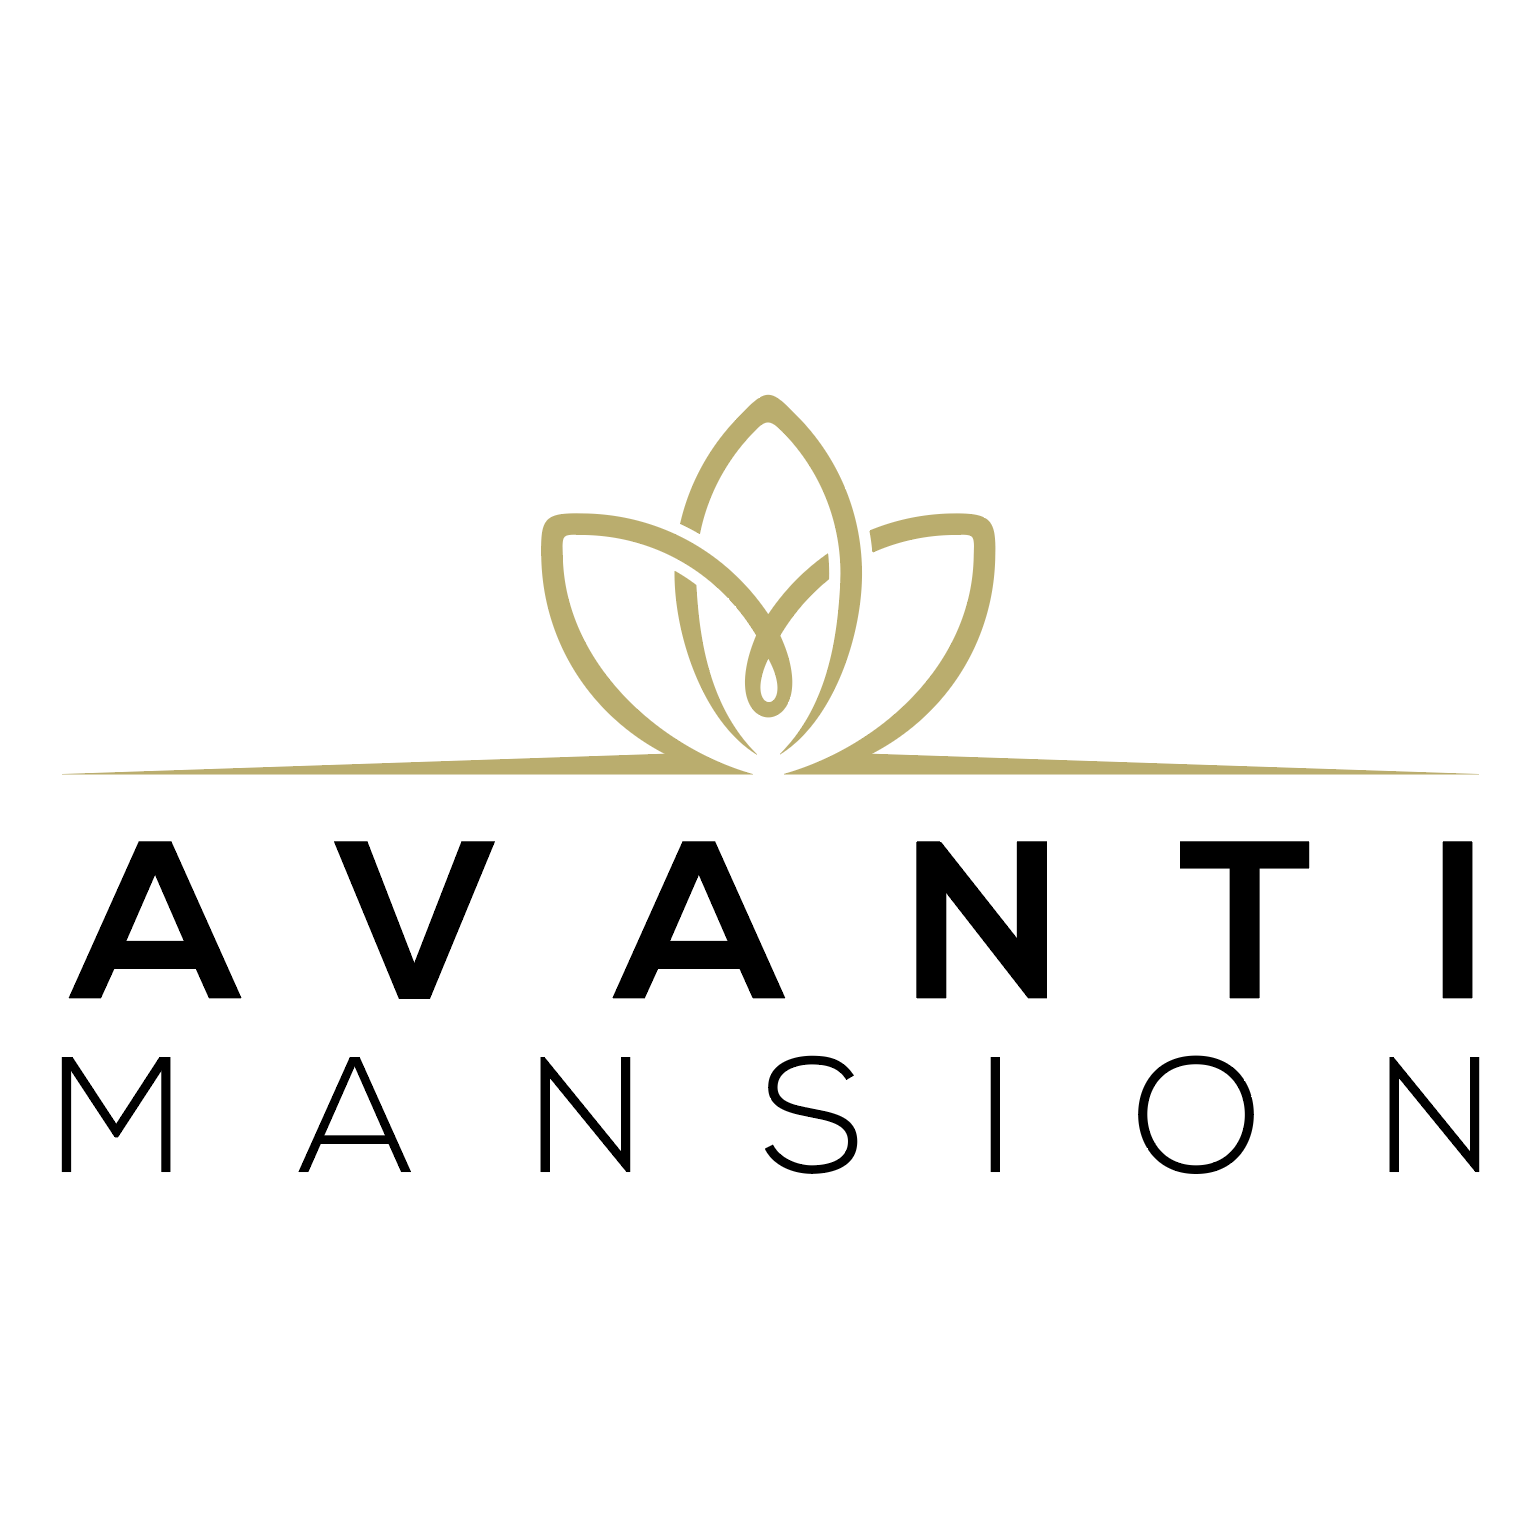 Avanti mansion square logo